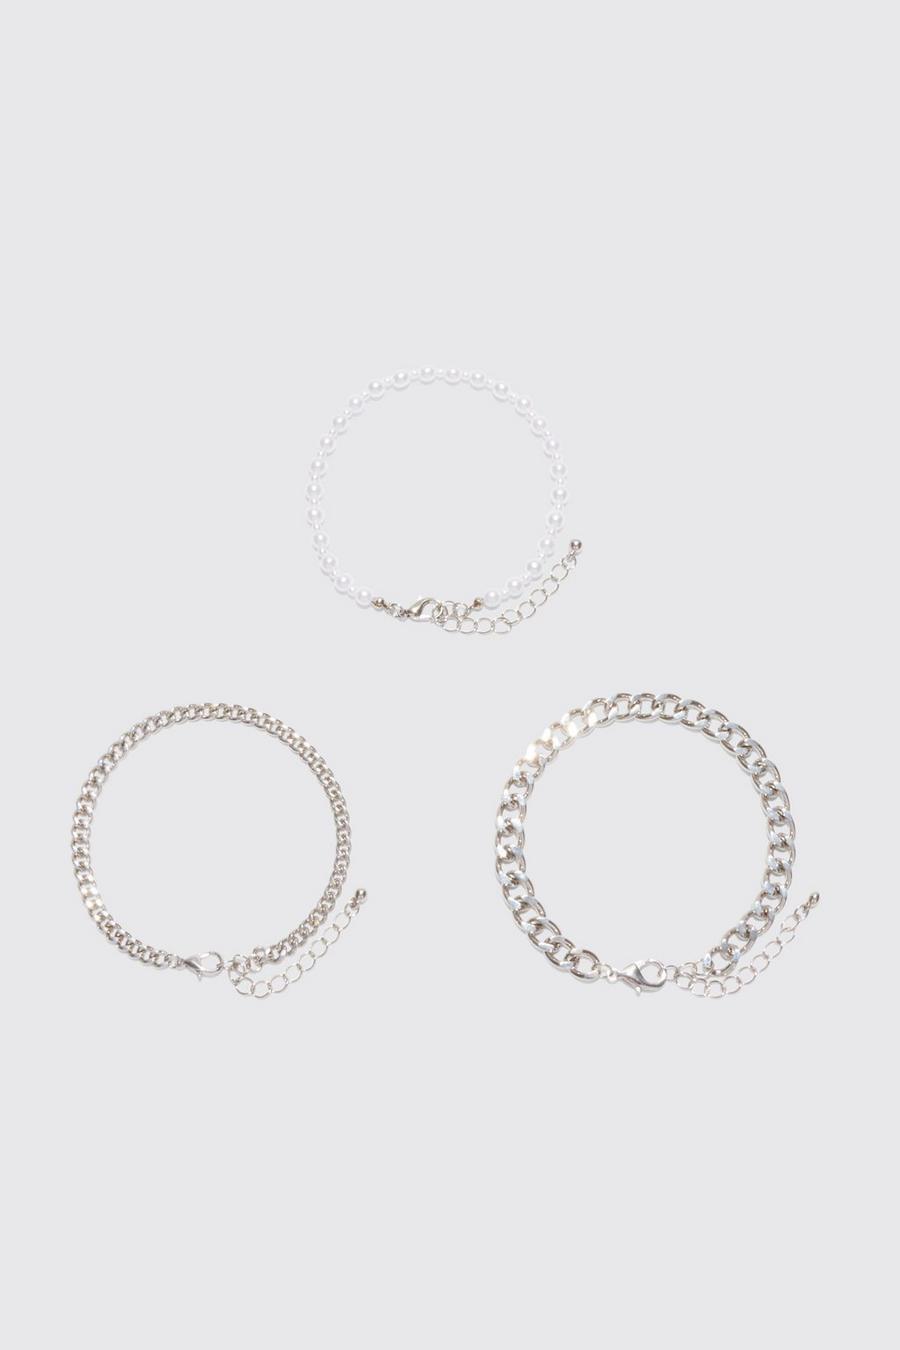 Multi Layer Chain Bracelet, Silver